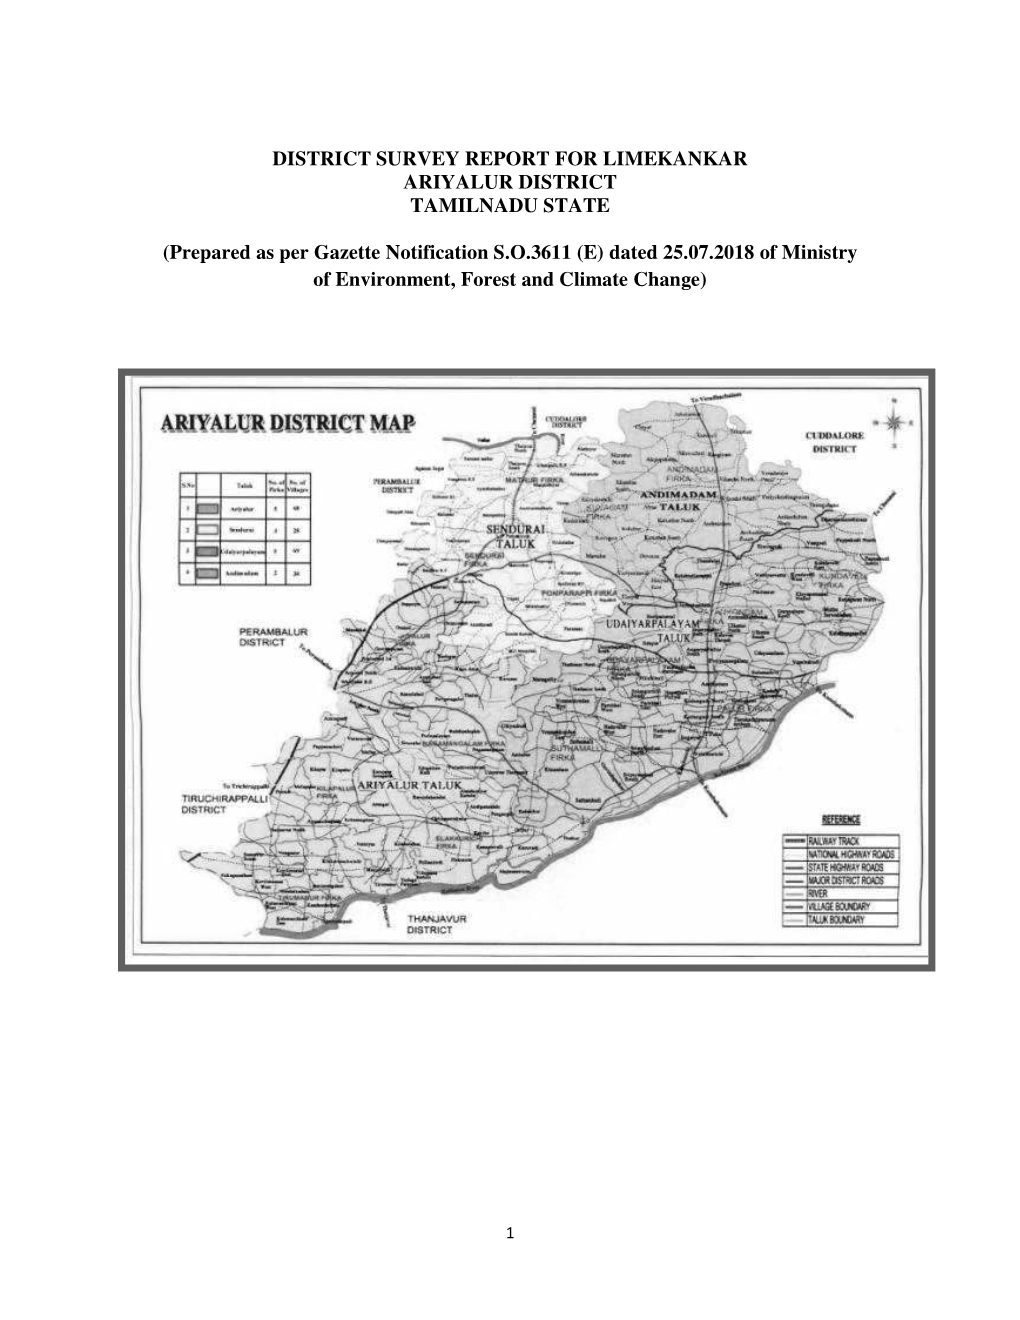 DISTRICT SURVEY REPORT for LIMEKANKAR ARIYALUR DISTRICT TAMILNADU STATE (Prepared As Per Gazette Notification S.O.3611 (E) Dated